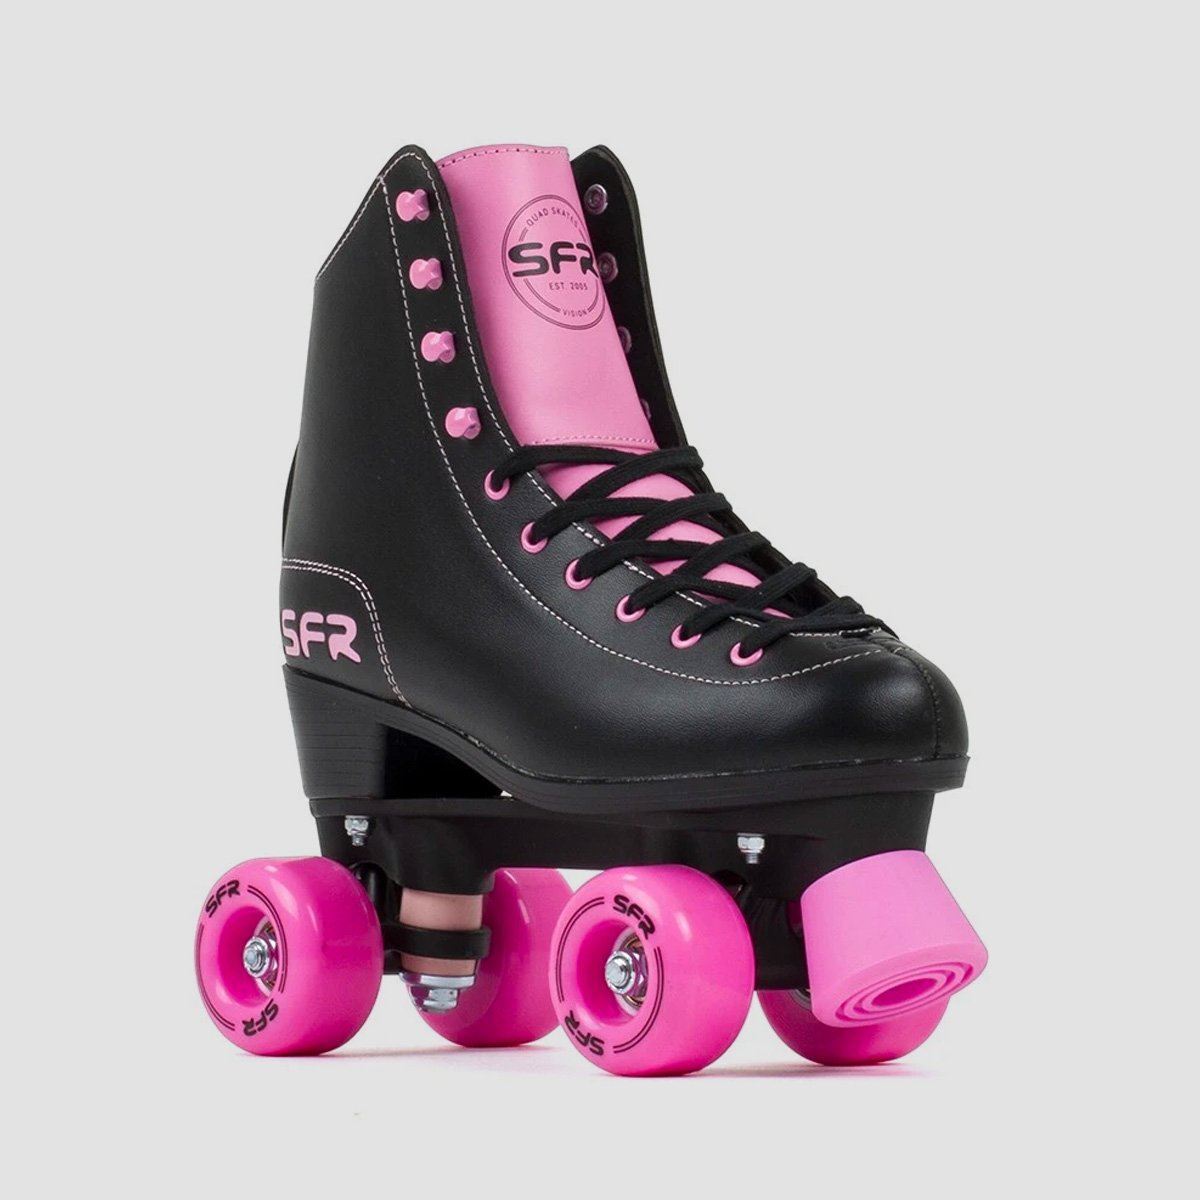 SFR Figure Quad Skates Black/Pink